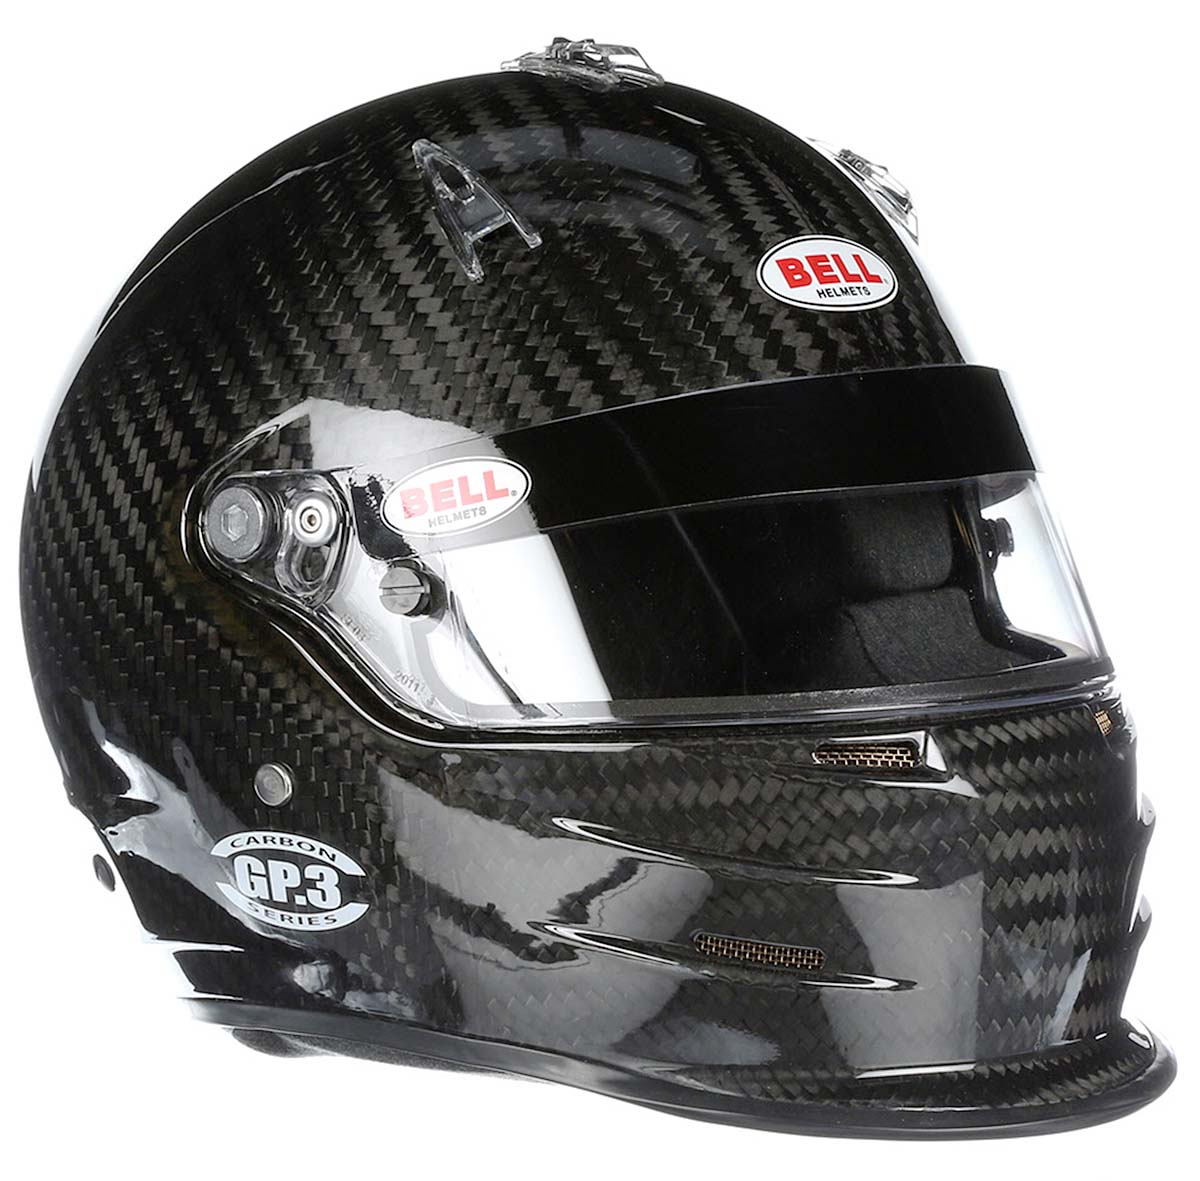 Stunning Bell GP.3 Carbon Fiber Helmet SA2020 Image Gallery